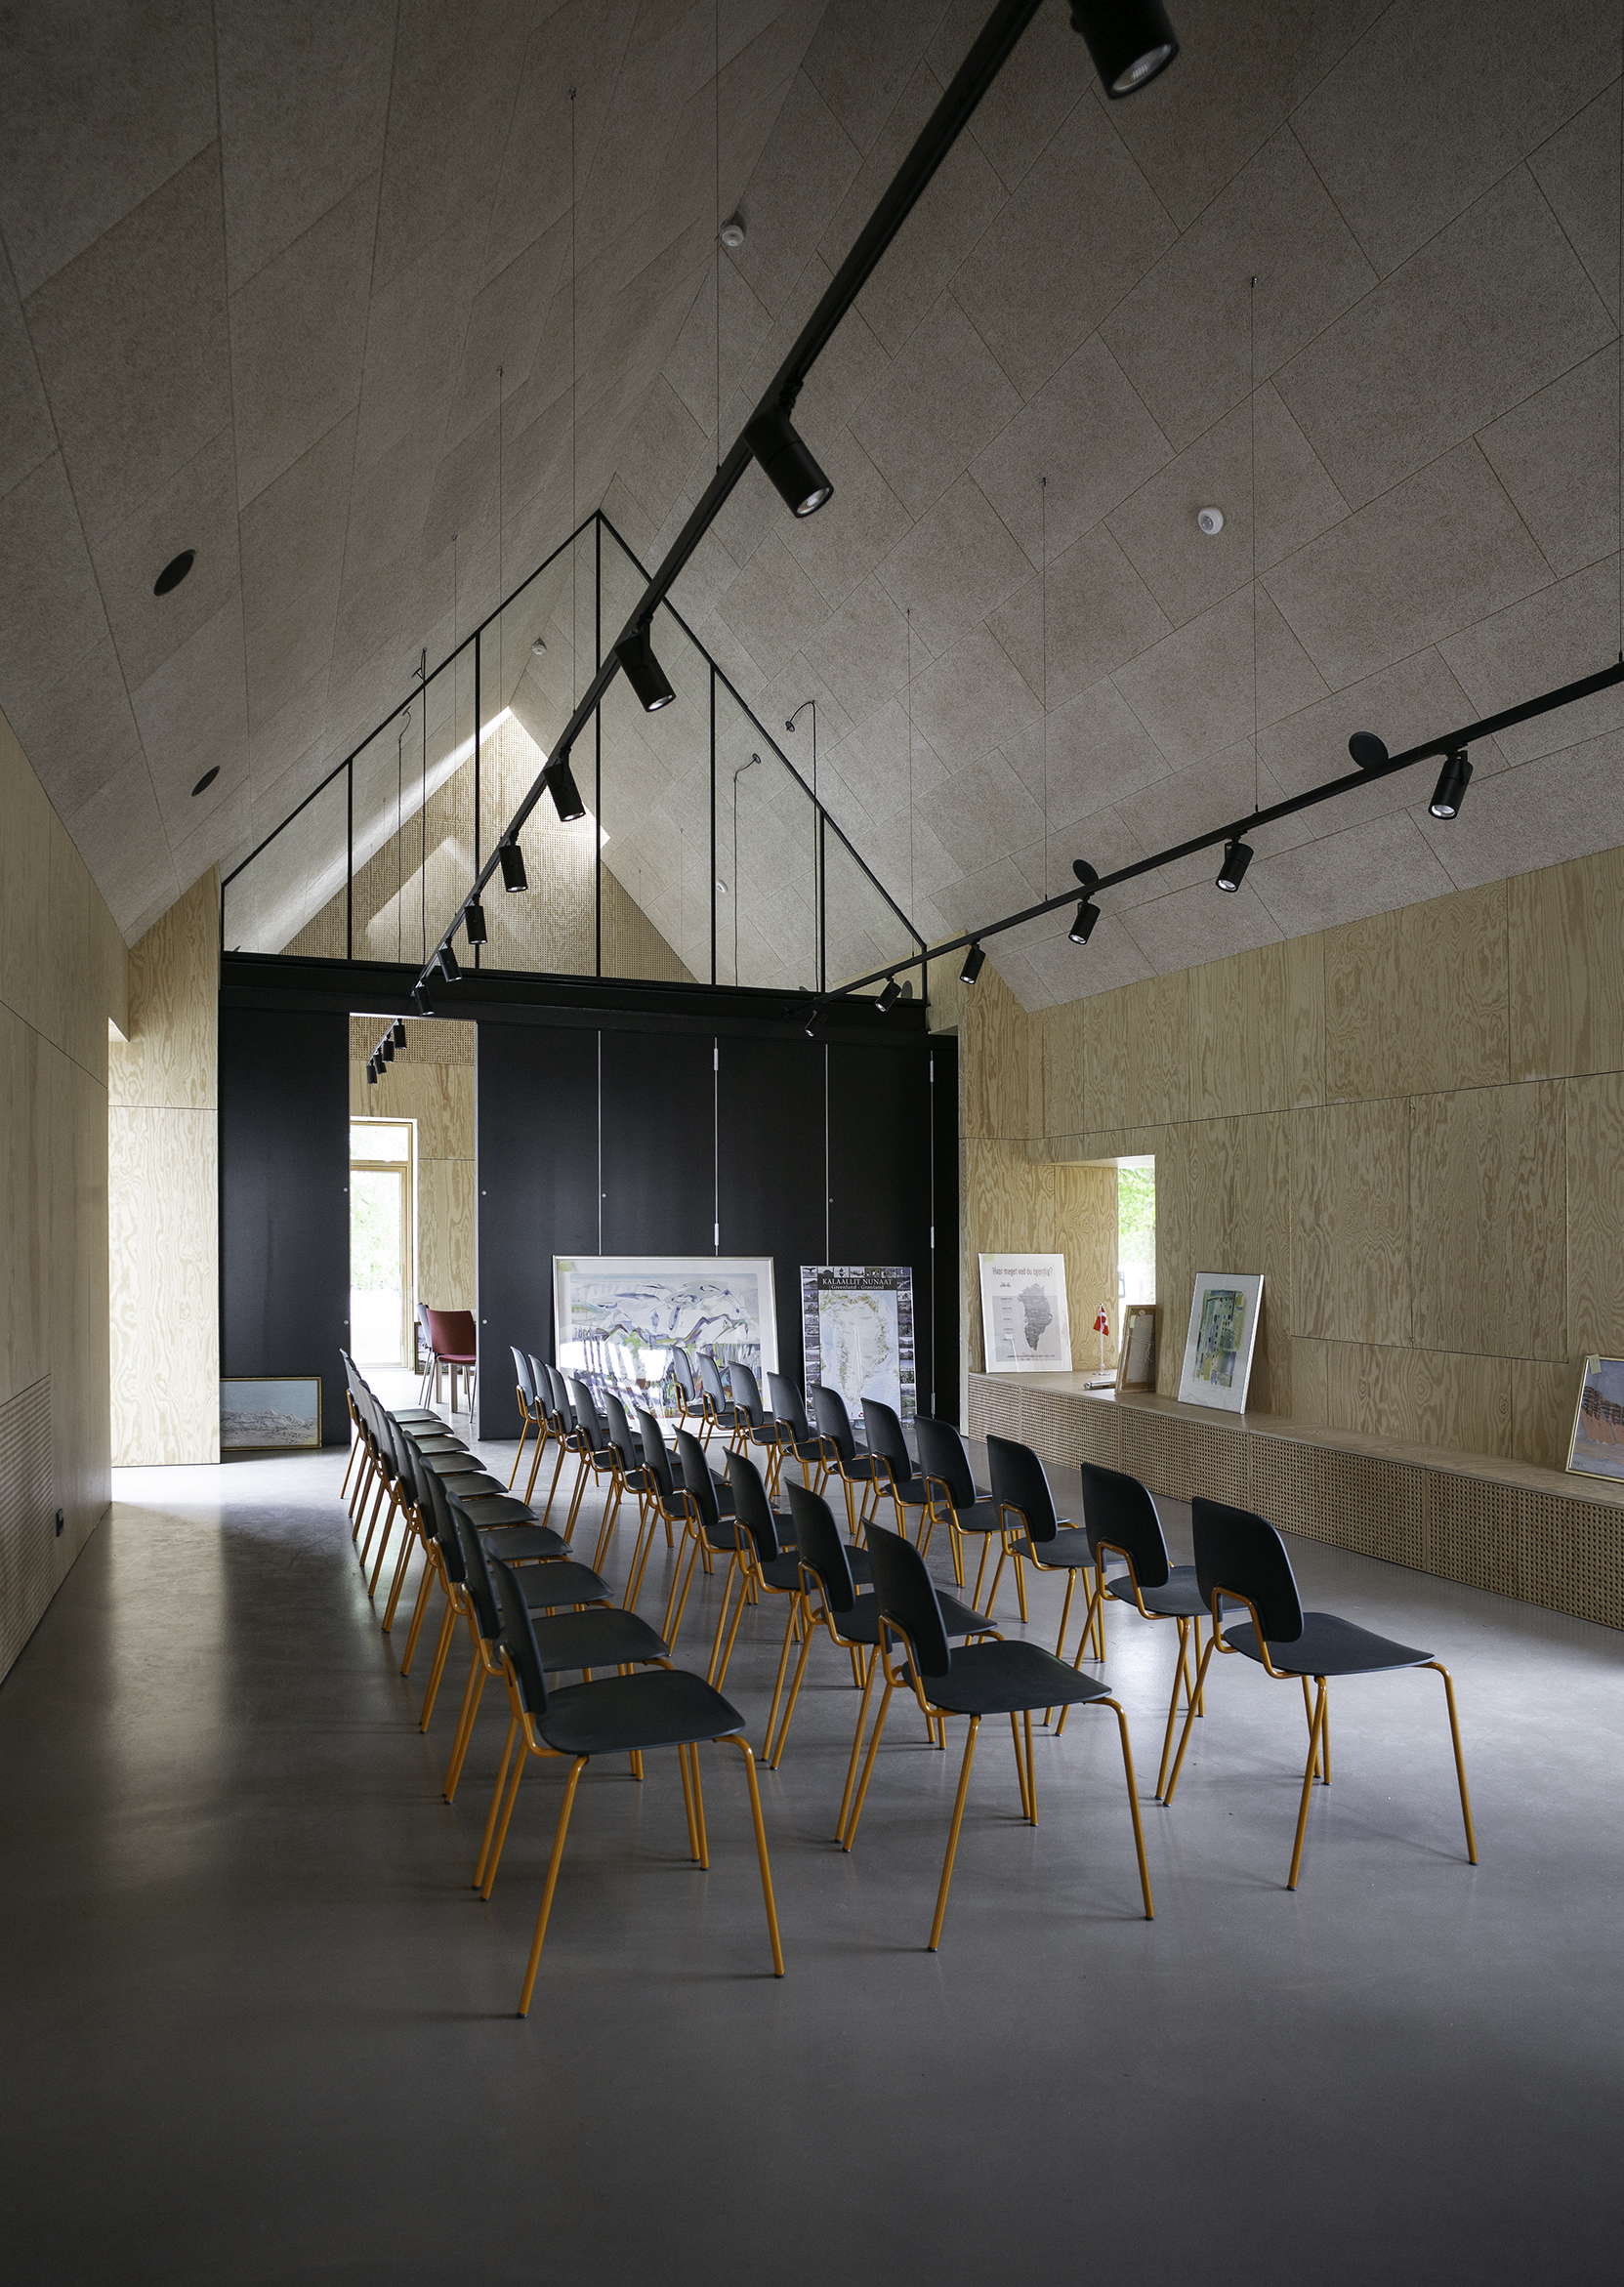 Samlingsrum med loft til kip med glatte træpaneler på vægge og stole foran lille scene